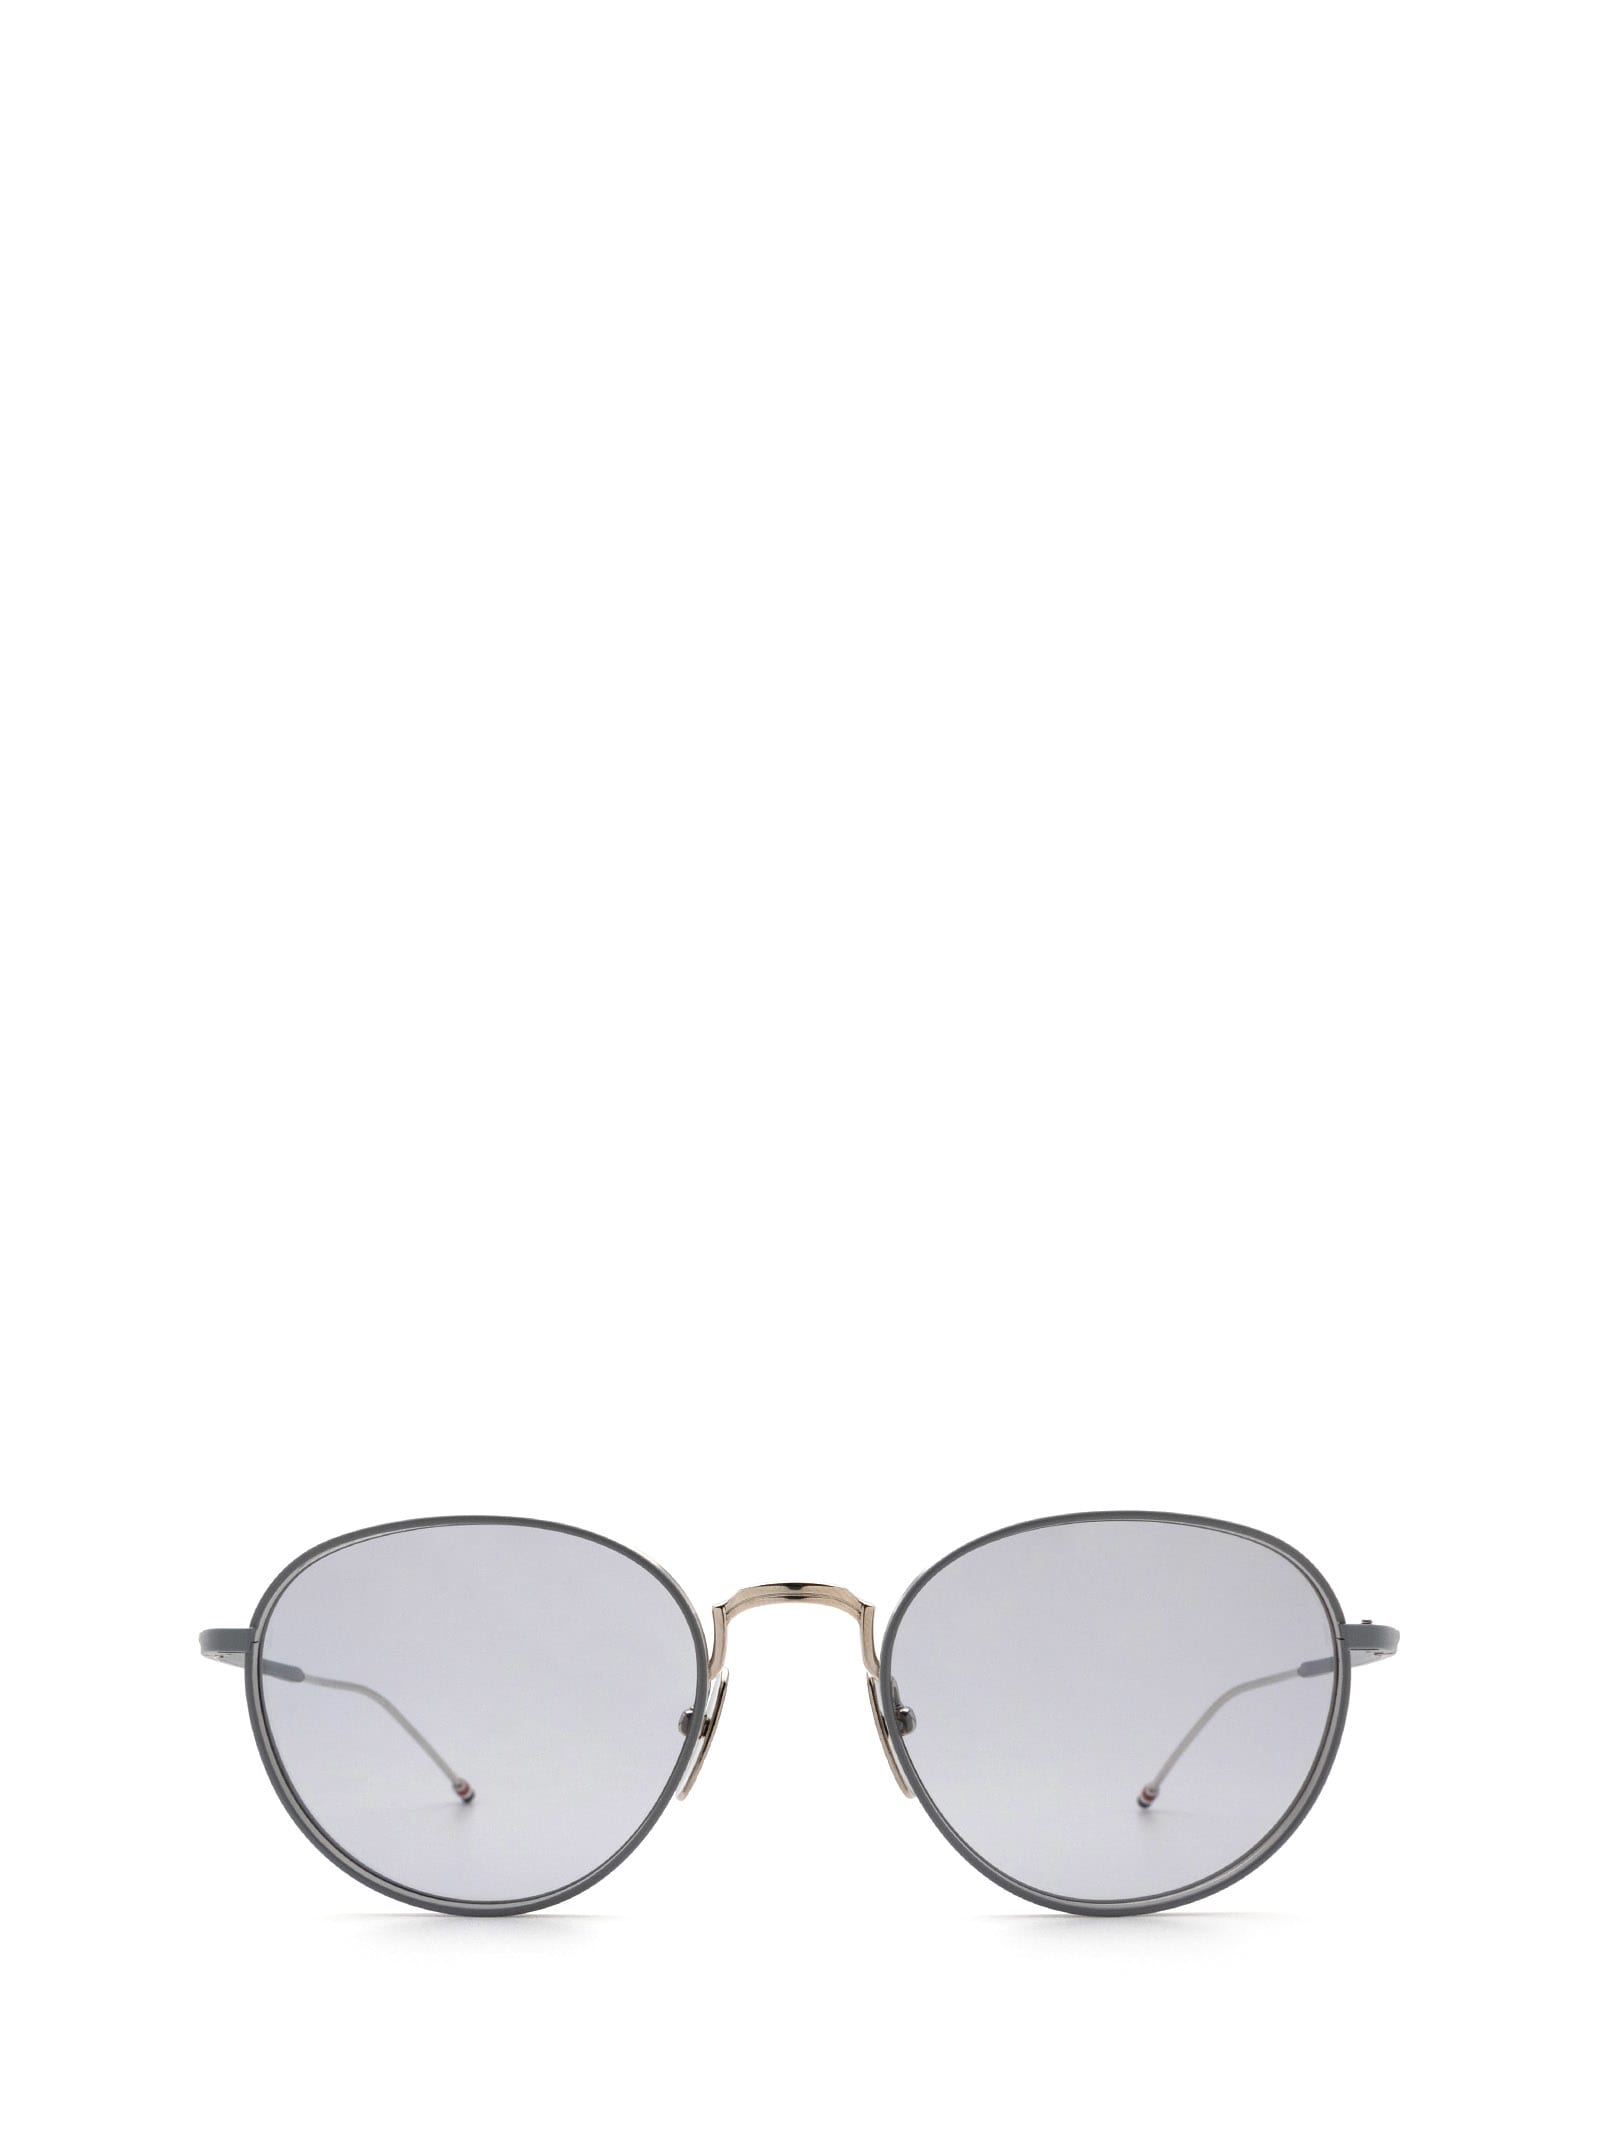 Thom Browne Tbs119-a-01 Silver Grey Sunglasses